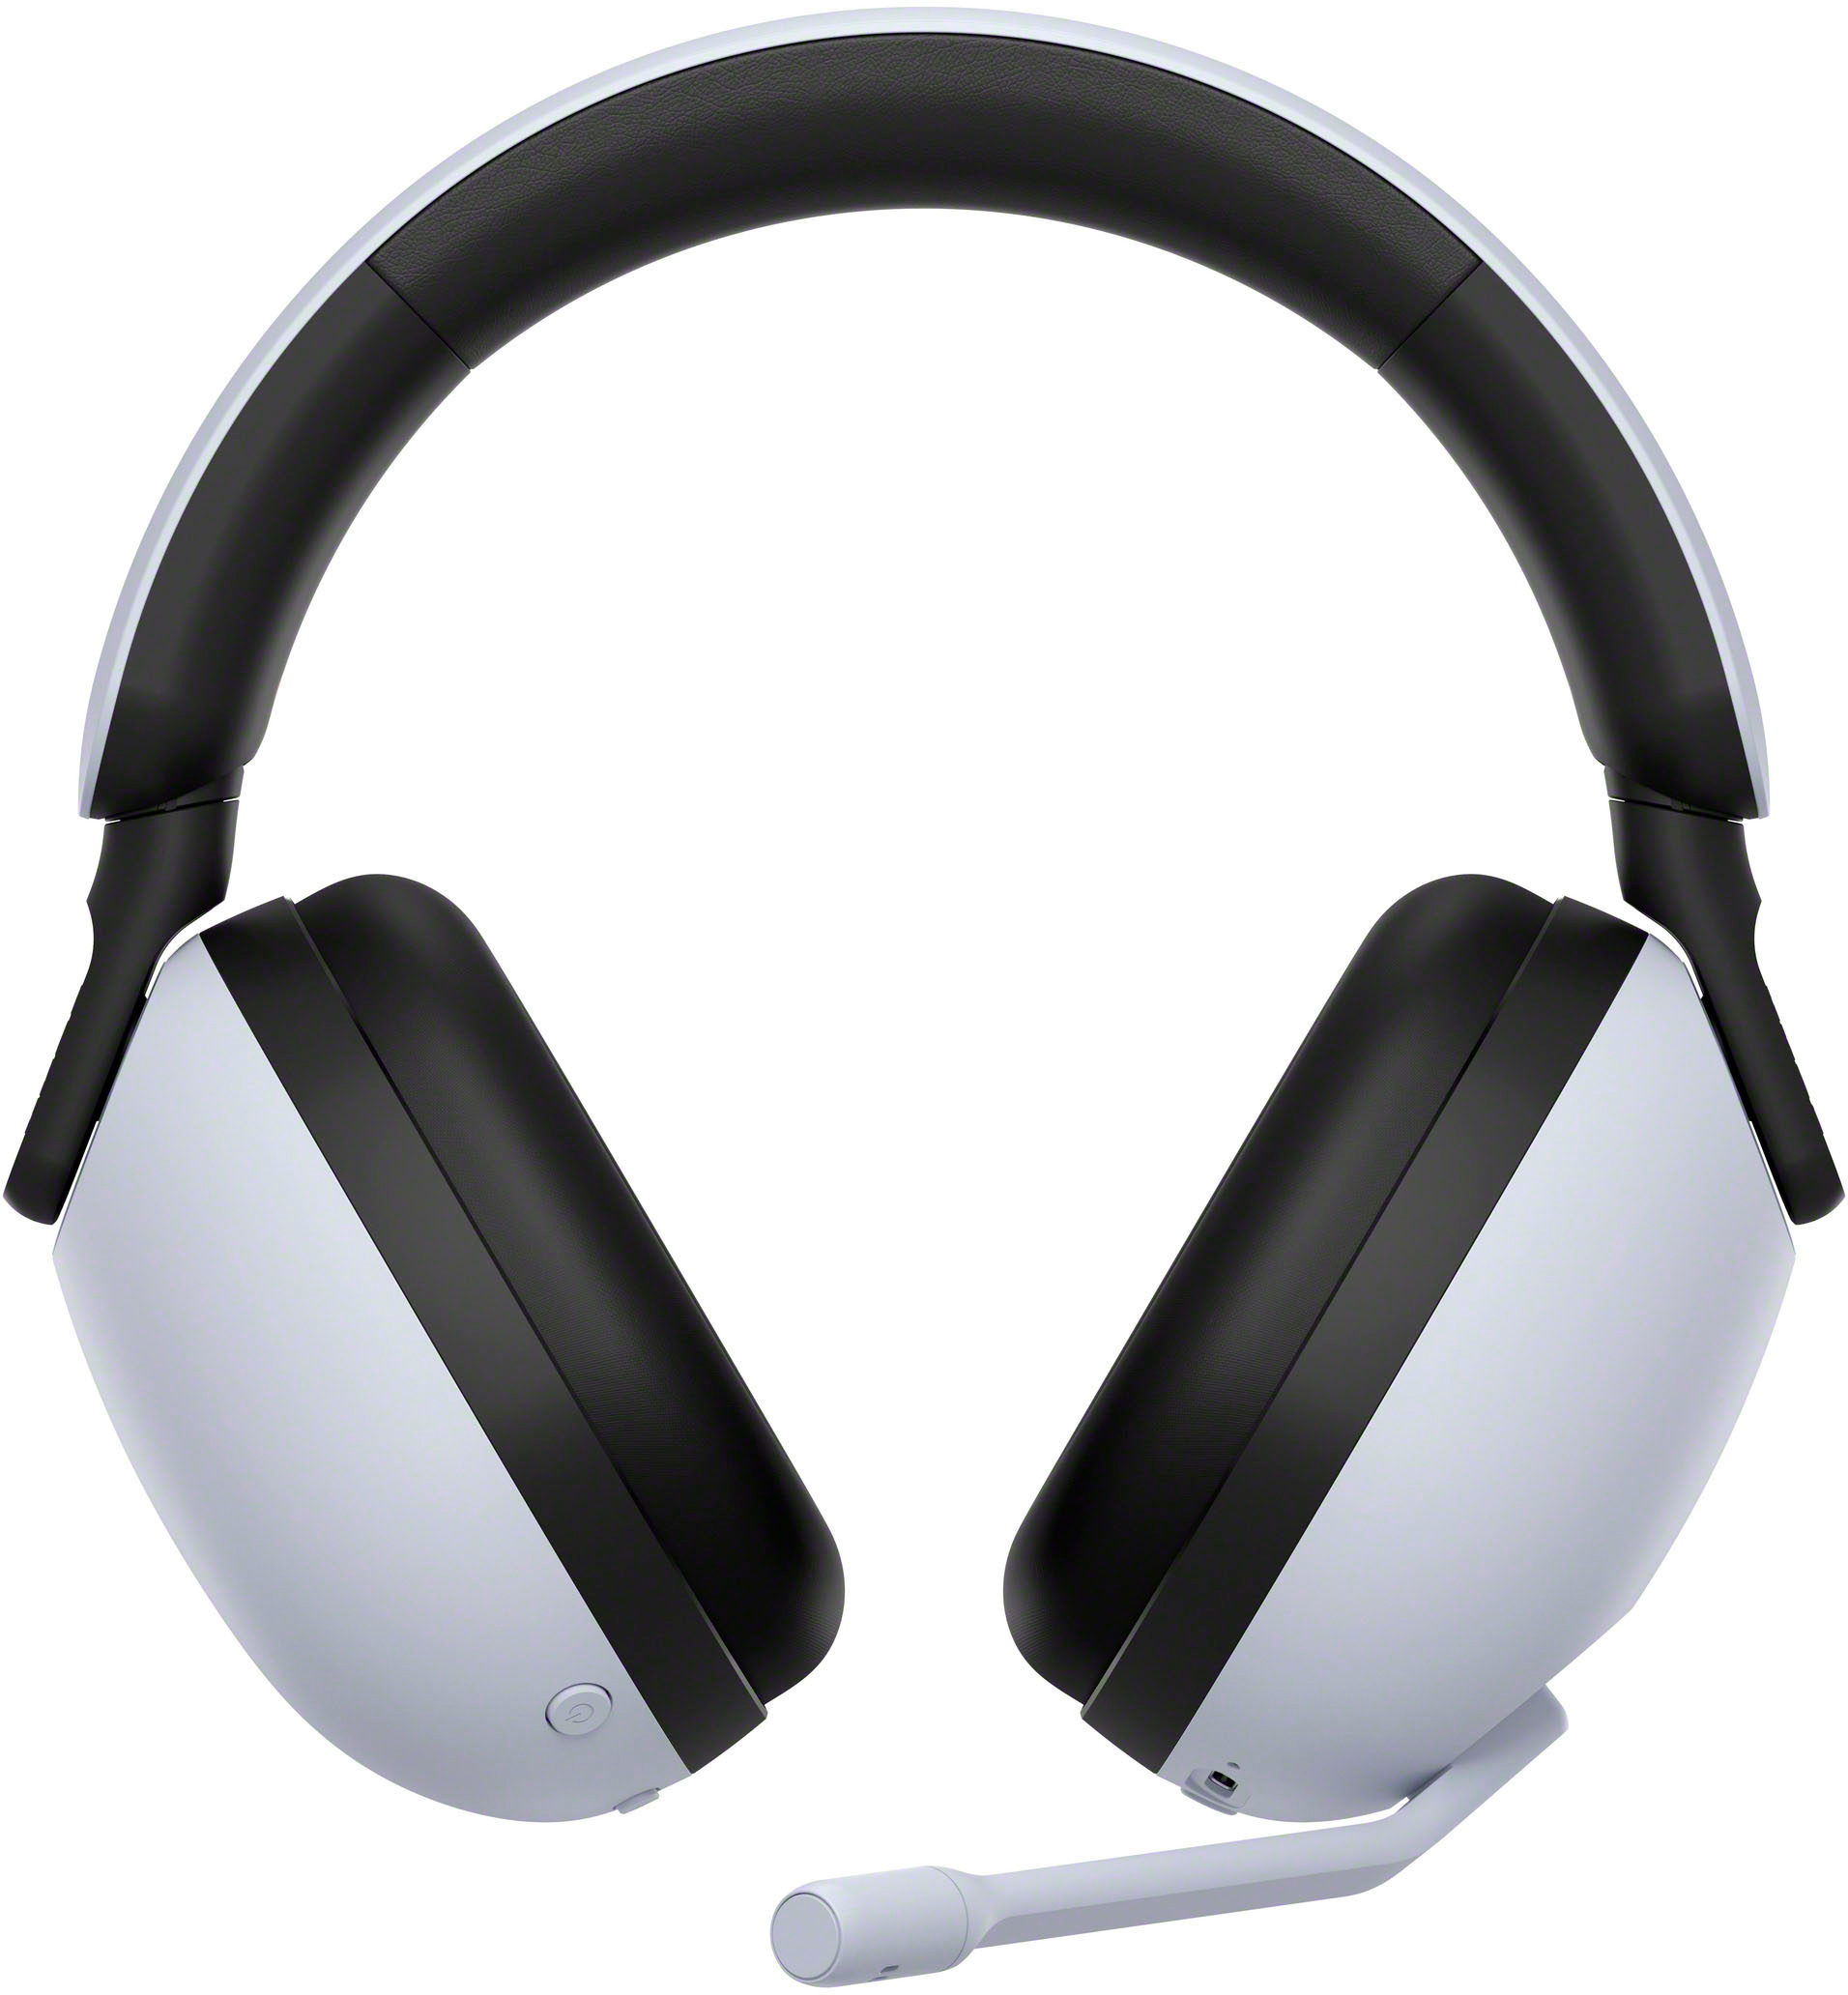 Maryanne Jones etikette donor Sony INZONE H9 Wireless Noise Canceling Gaming Headset White WHG900N/W -  Best Buy